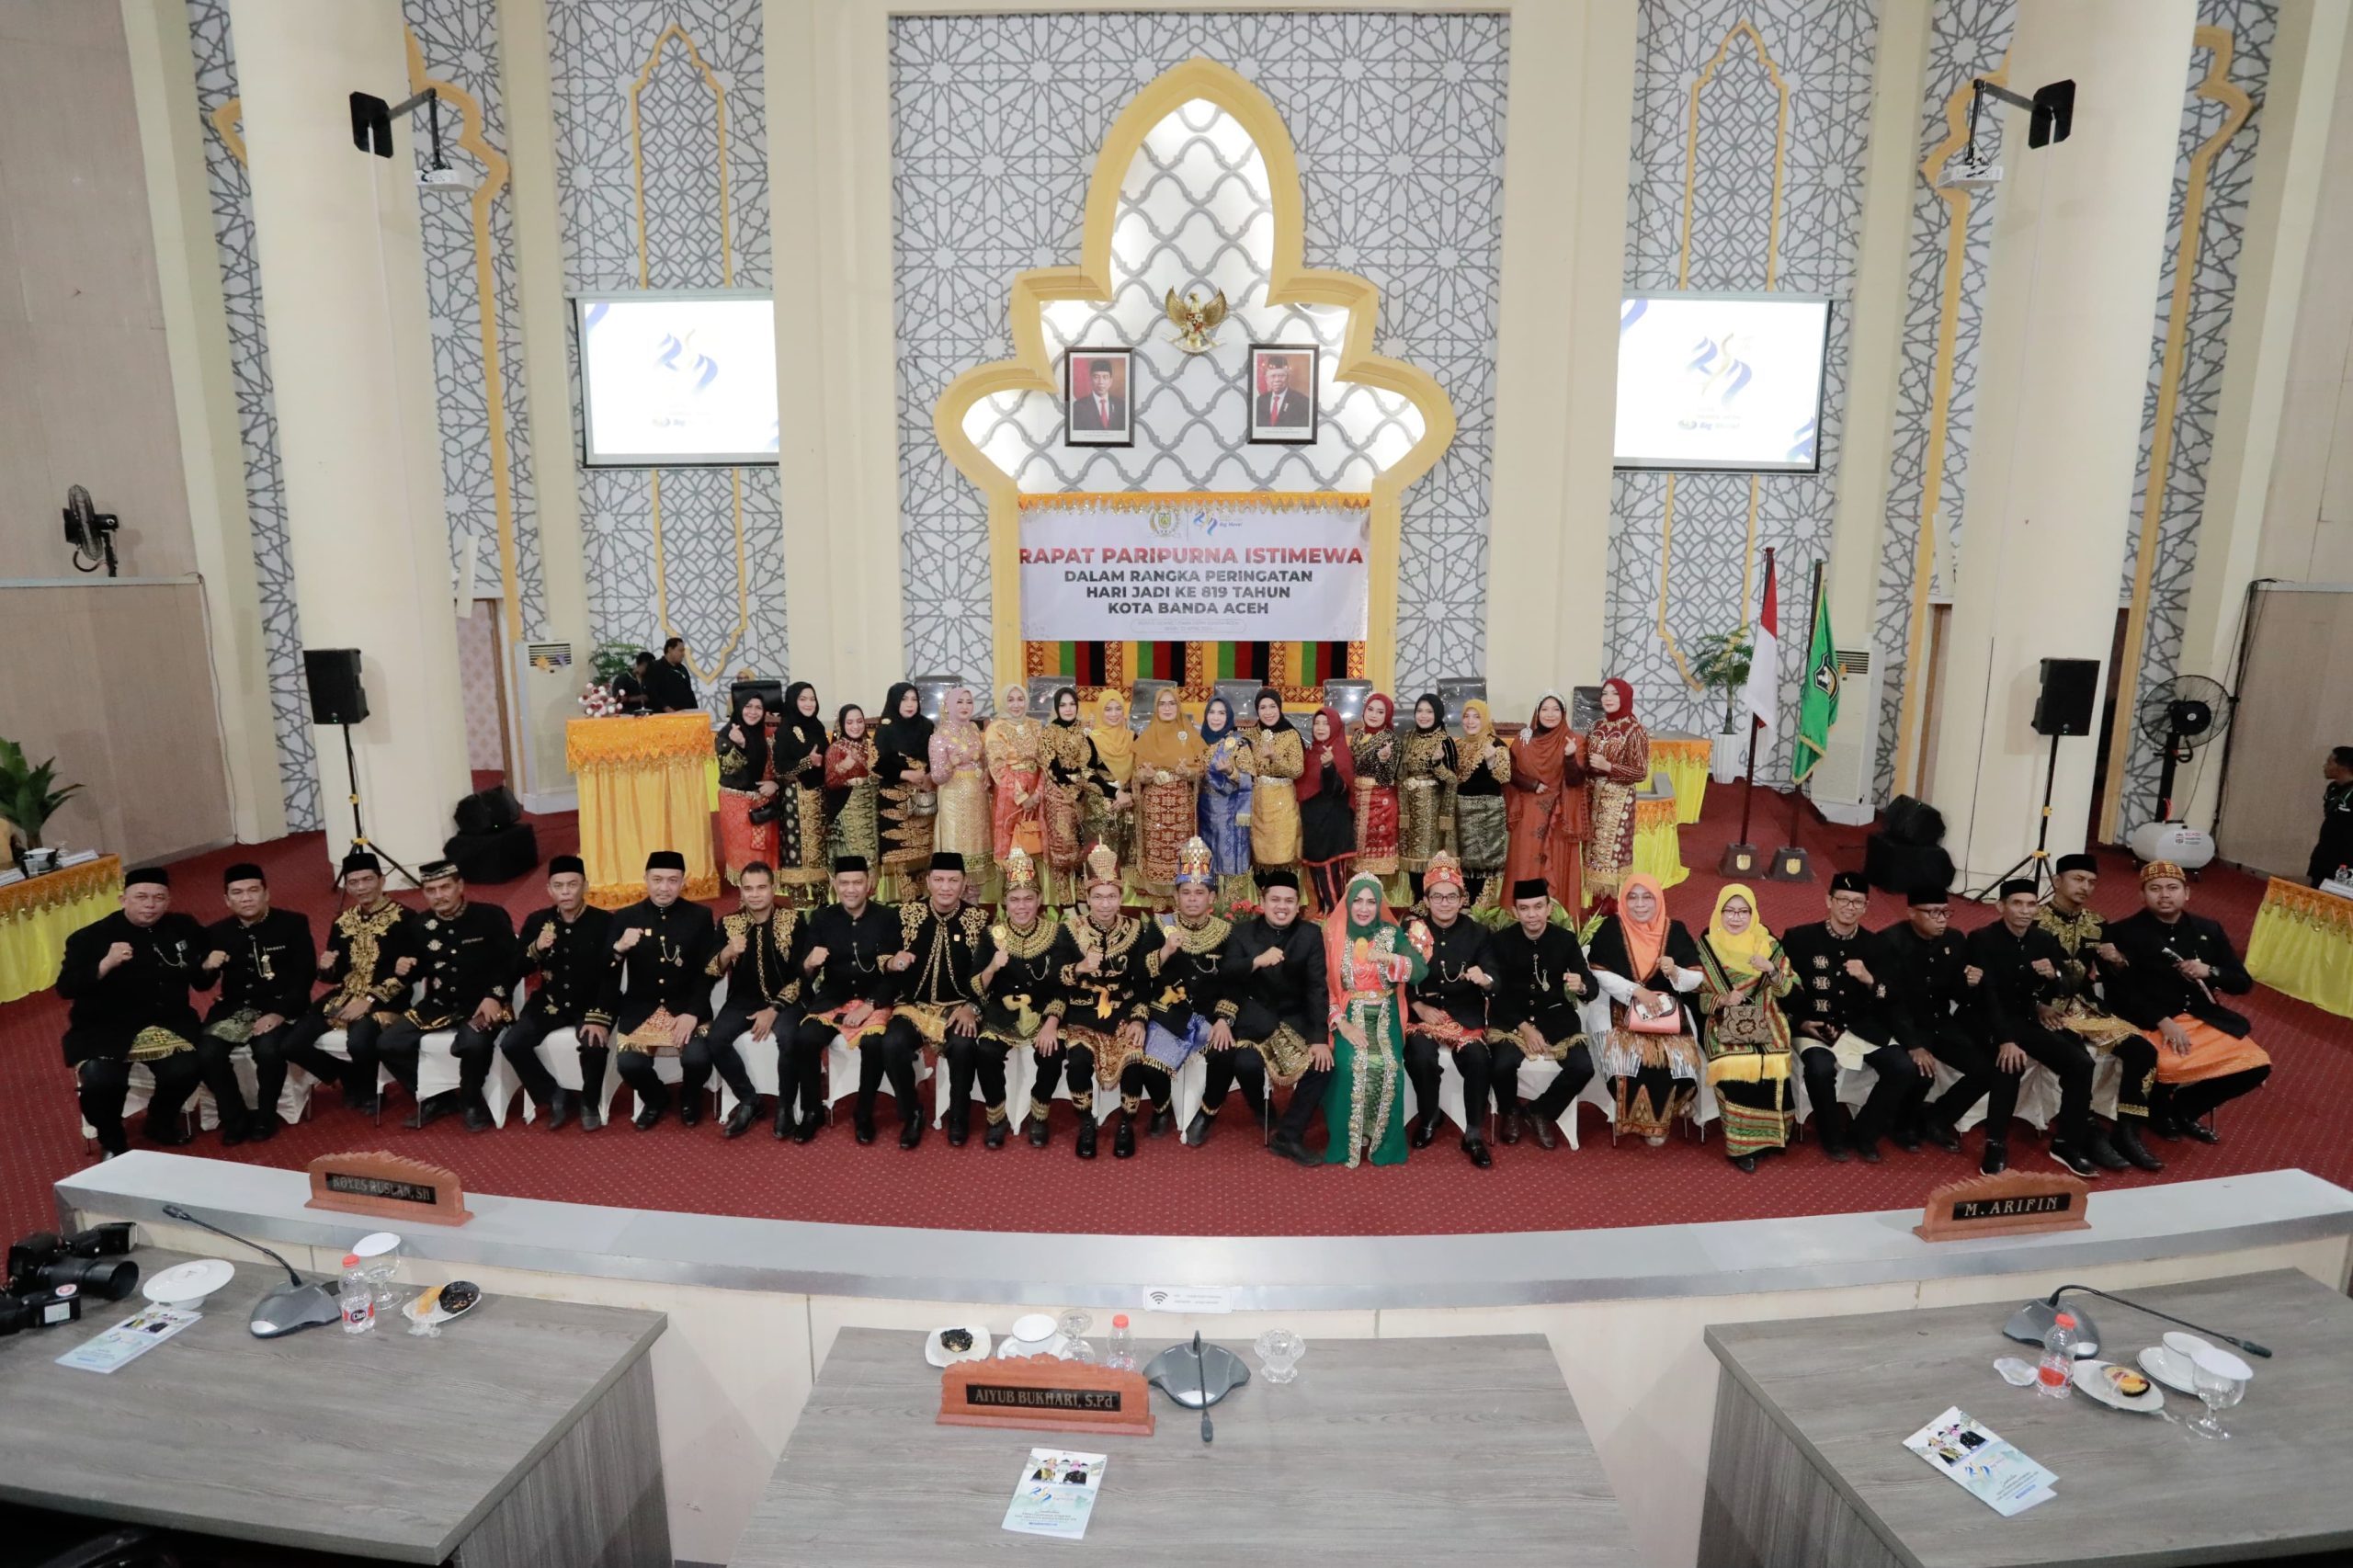 HUT Ke-819 Banda Aceh, Refleksi Sejarah dan Pembangunan Kota Sejarah di Nusantara